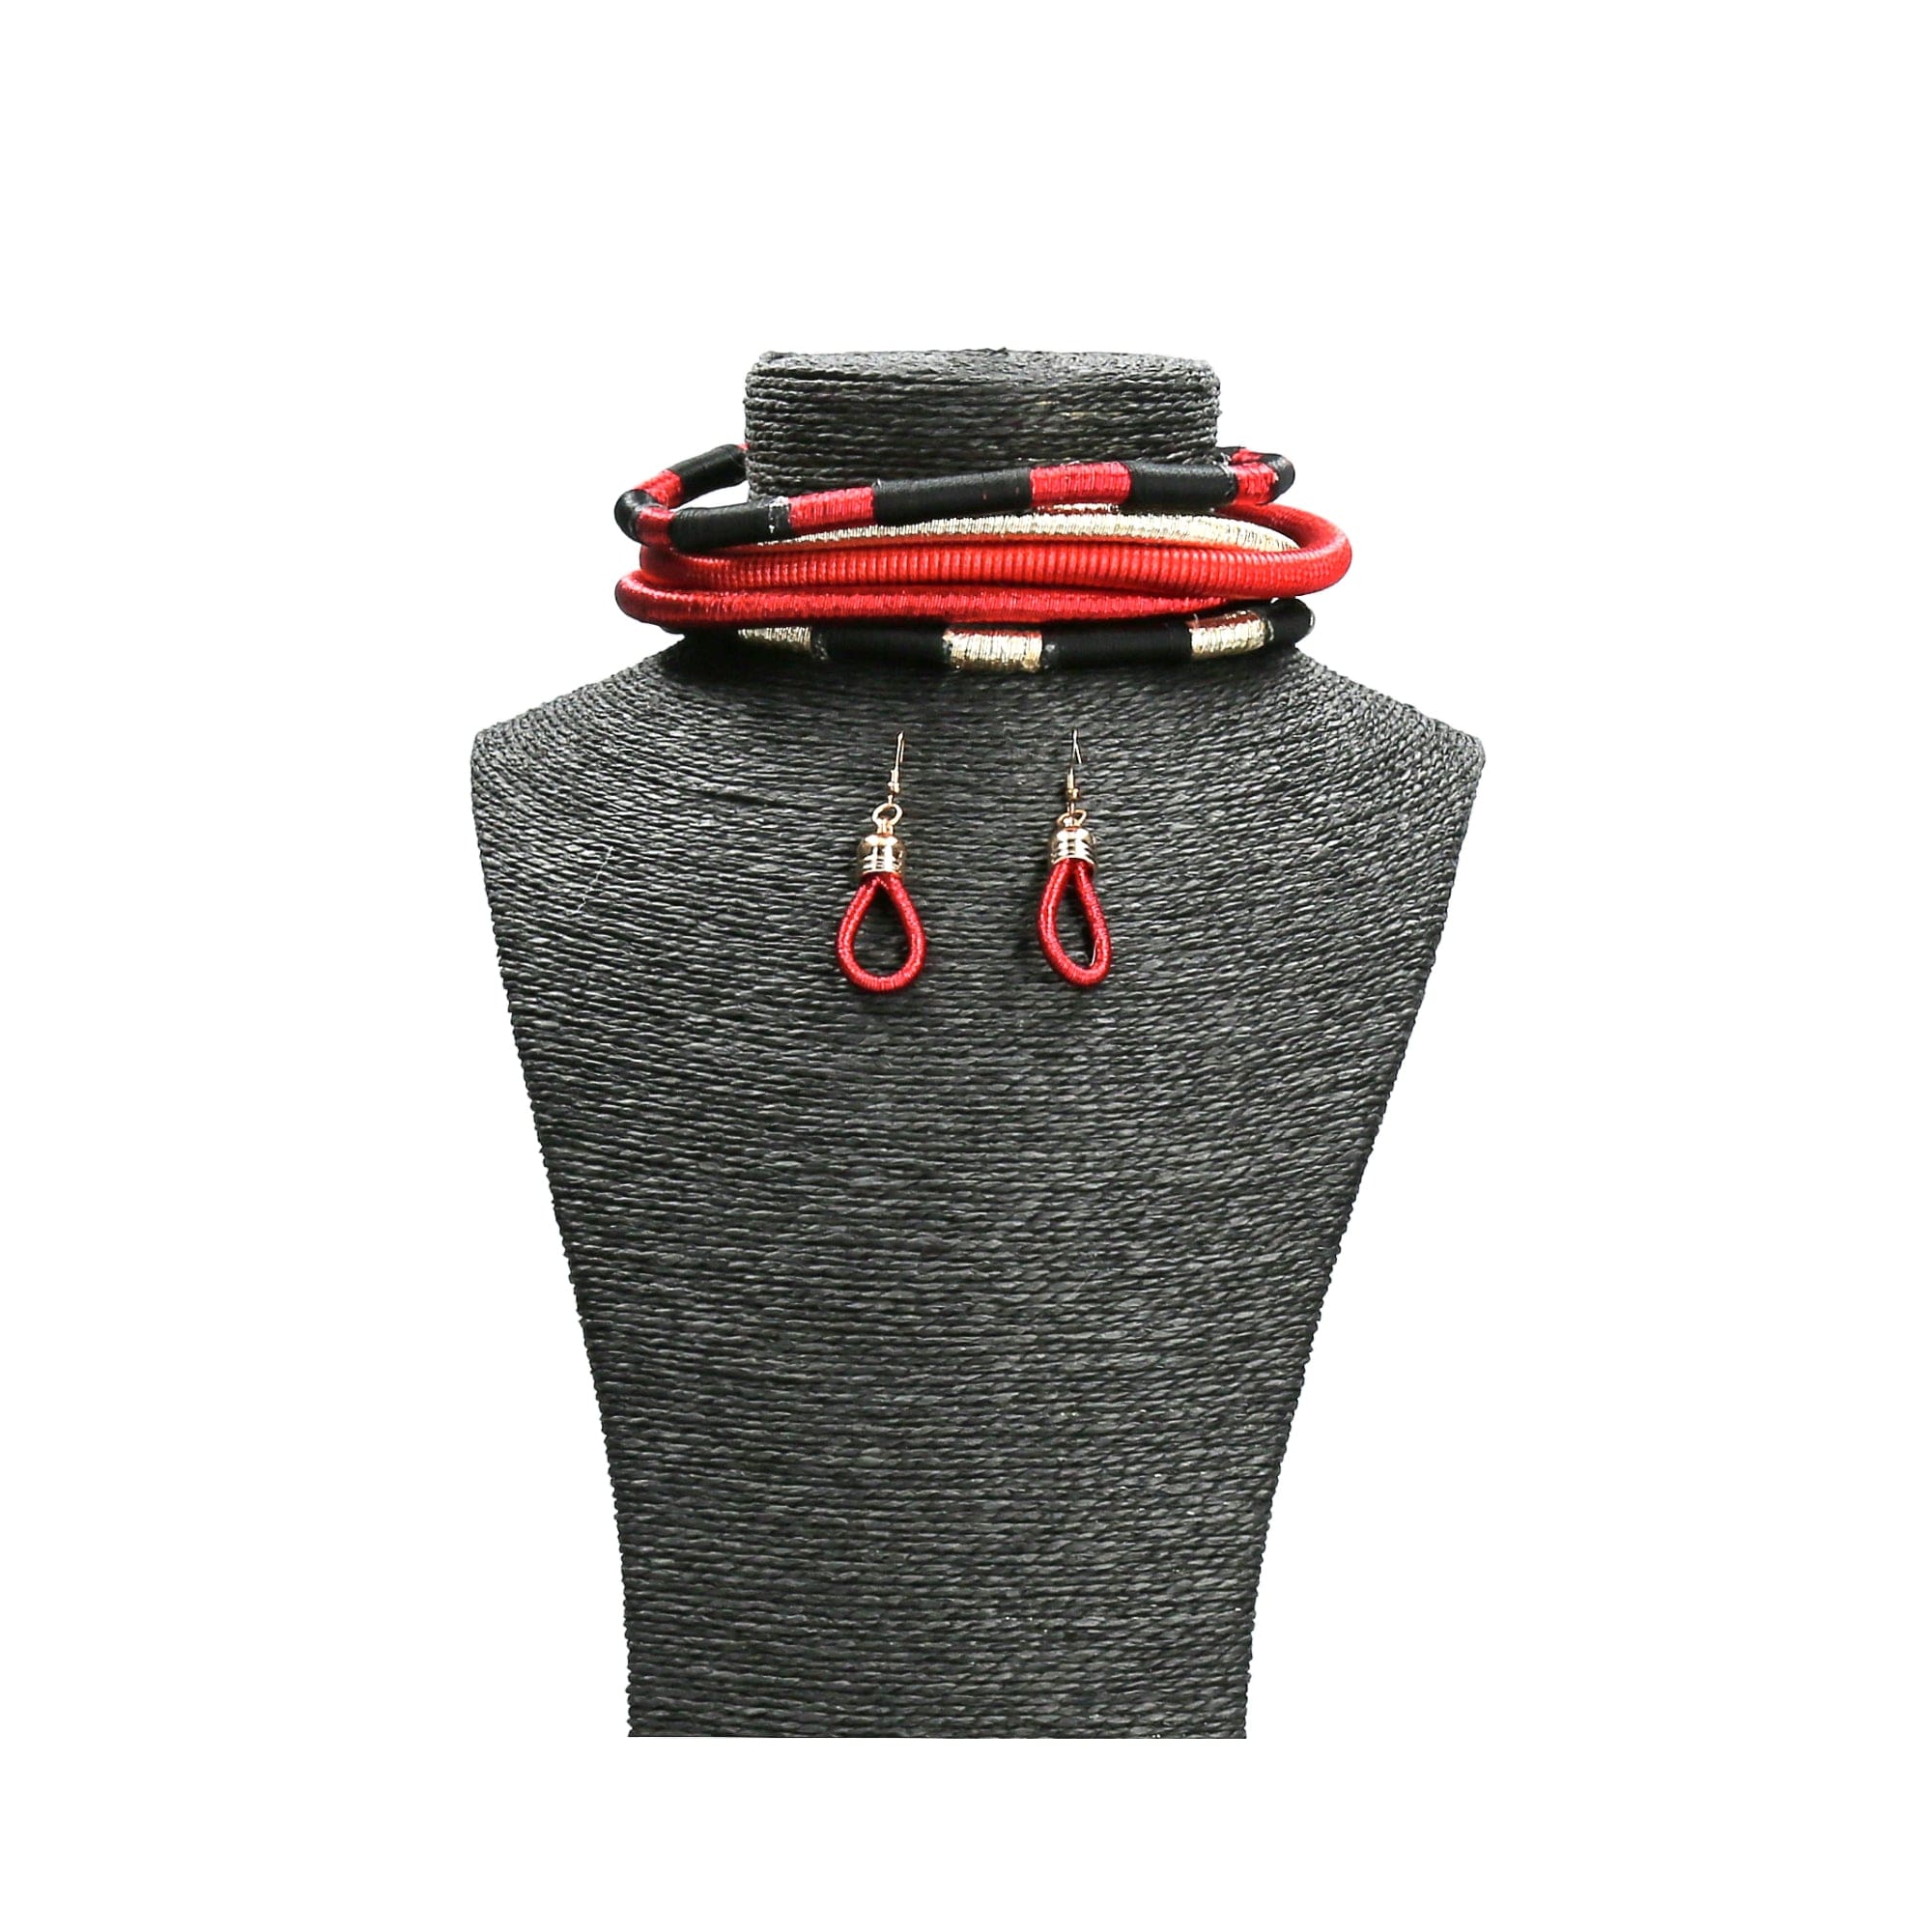 Persephone smyckesset - Röd - Halsband